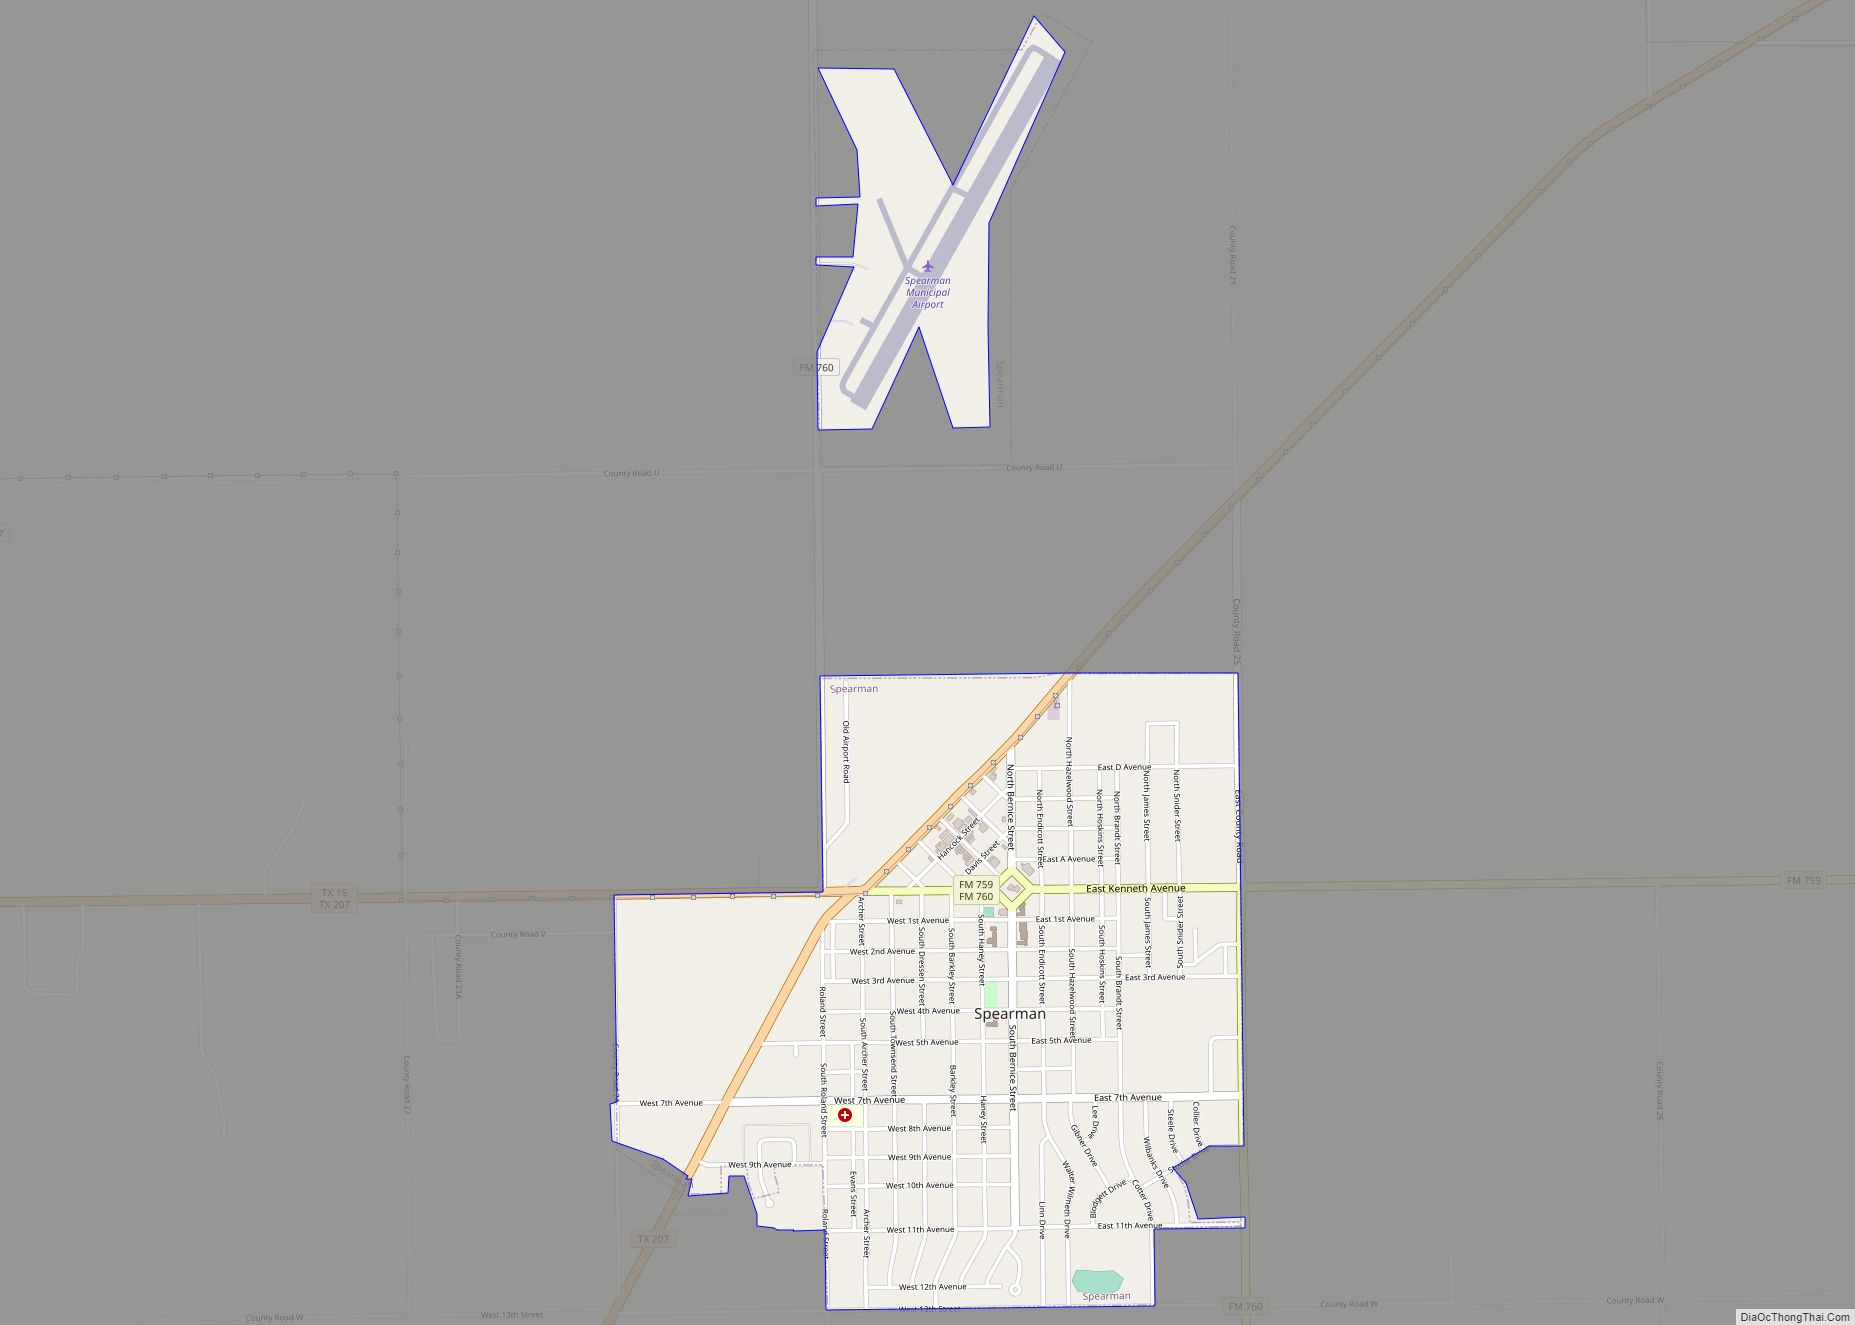 Map of Spearman city